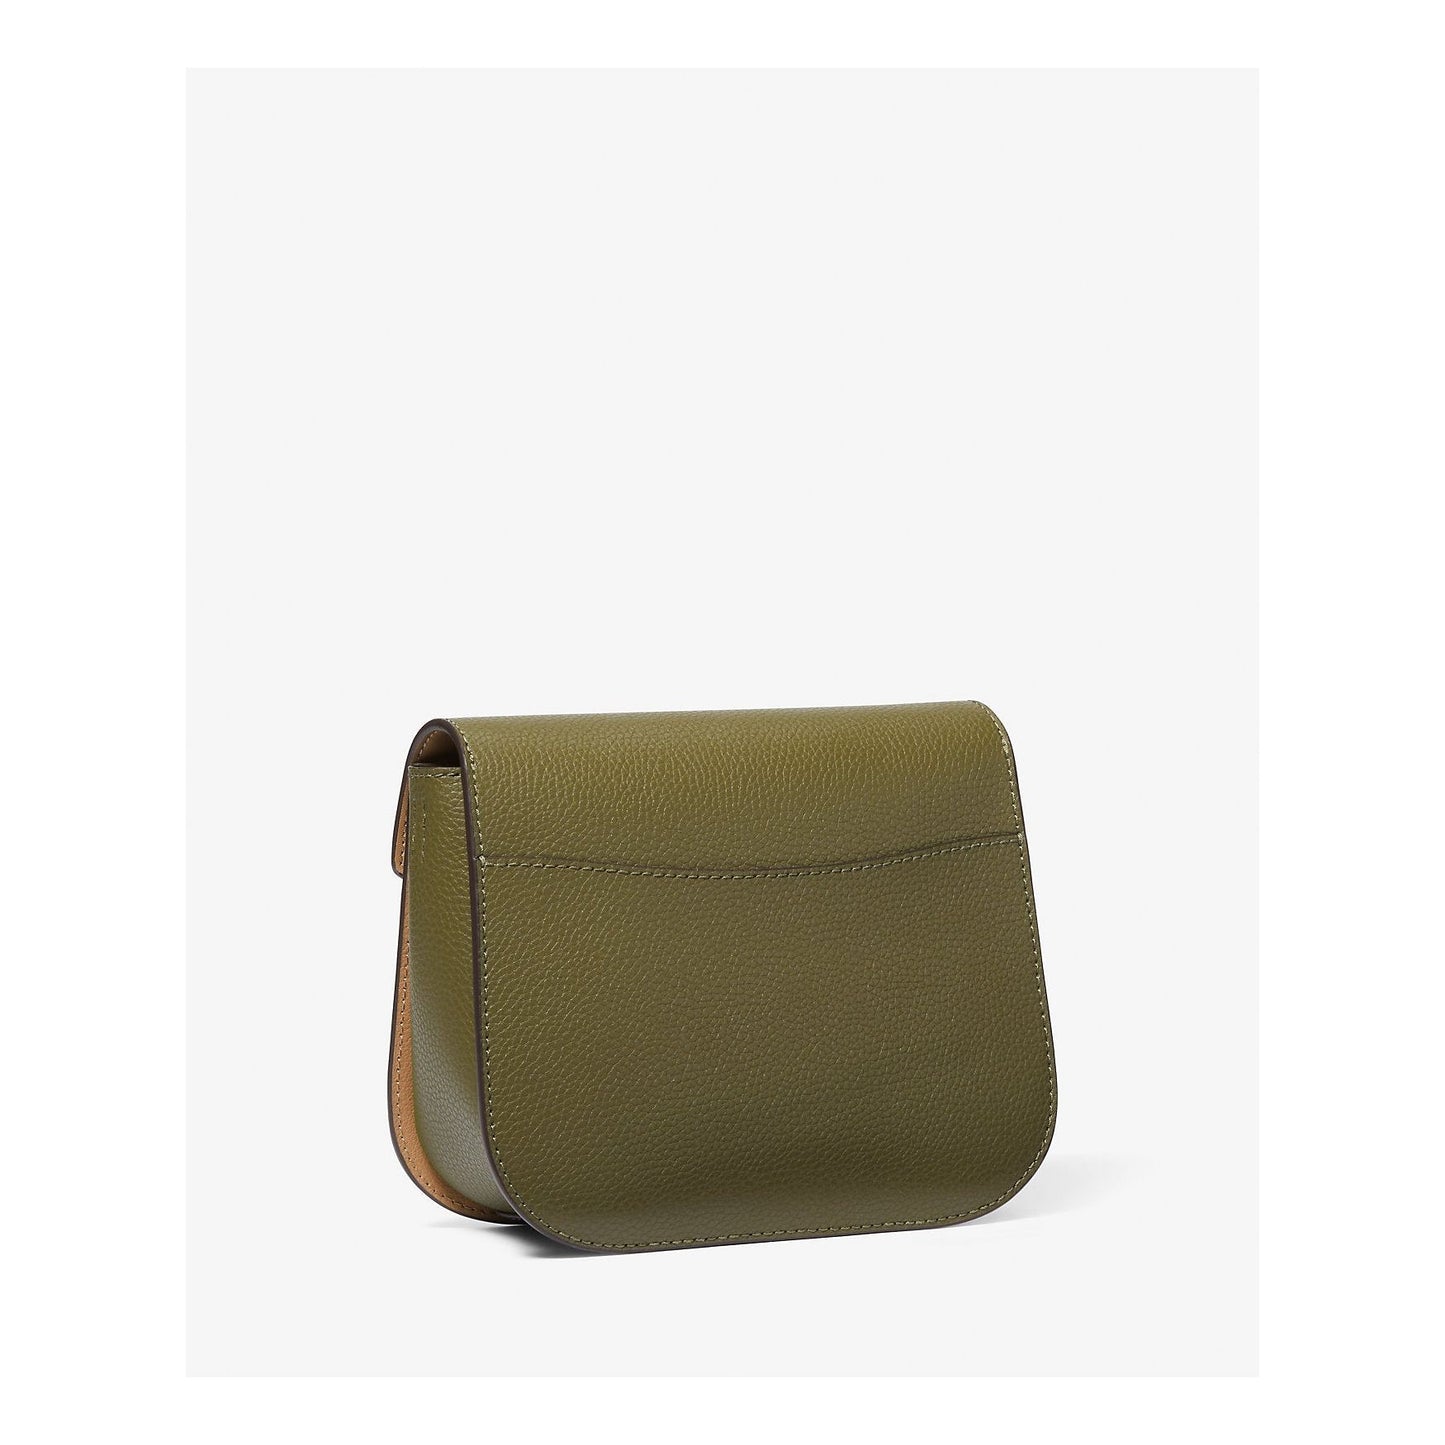 Michael Kors Emilia Small Leather Crossbody Bag (Olive)